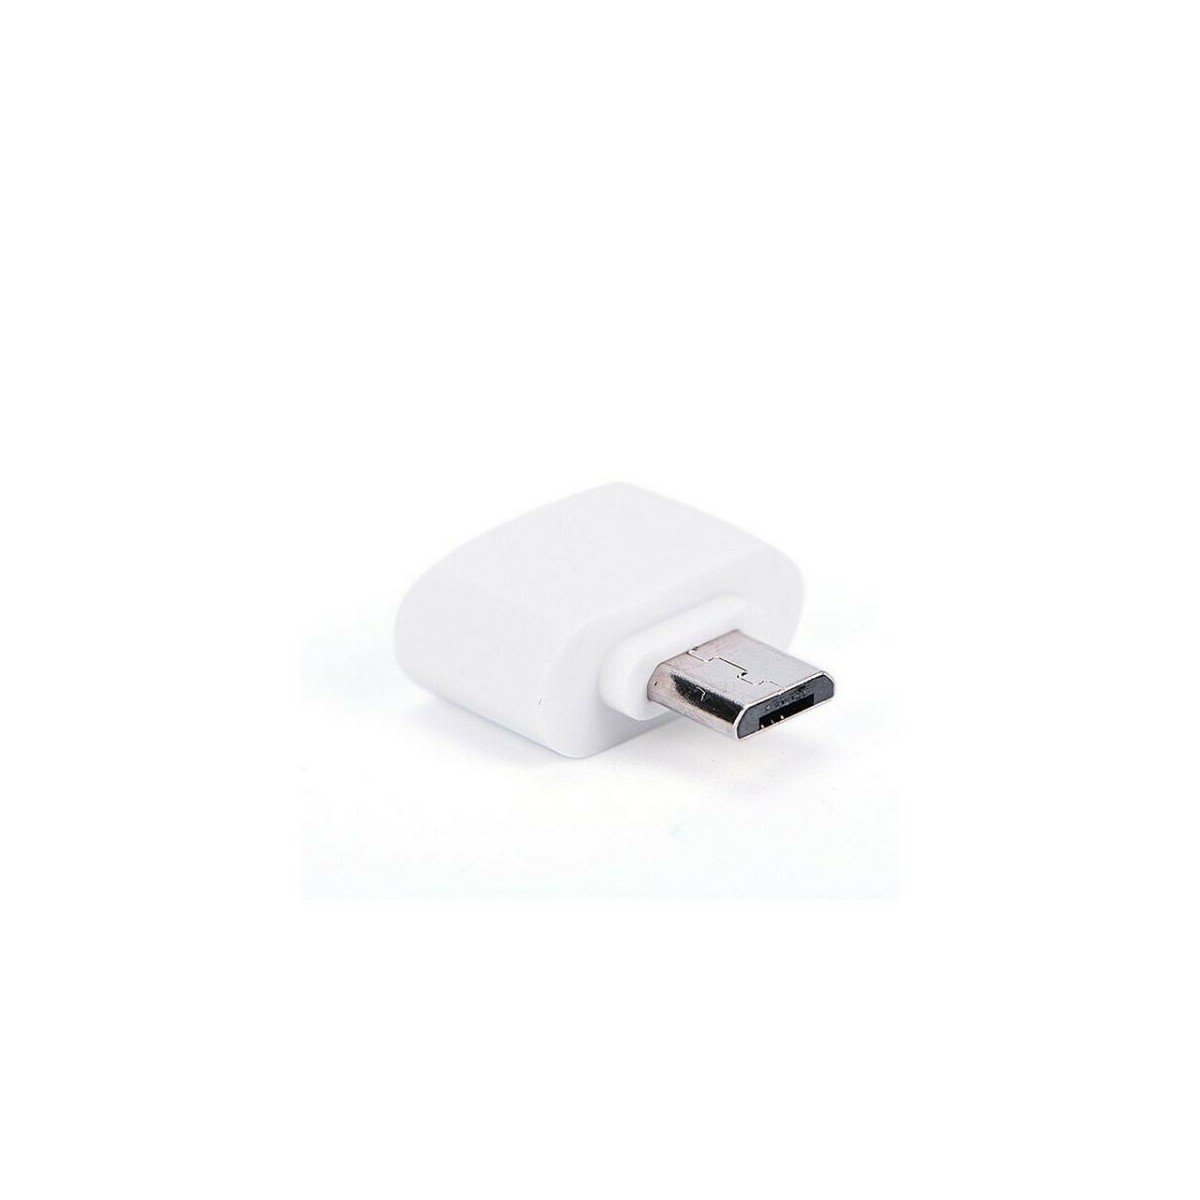 Adaptateur Convertisseur USB FEMELLE - MICRO USB MALE OTG (sans câble)